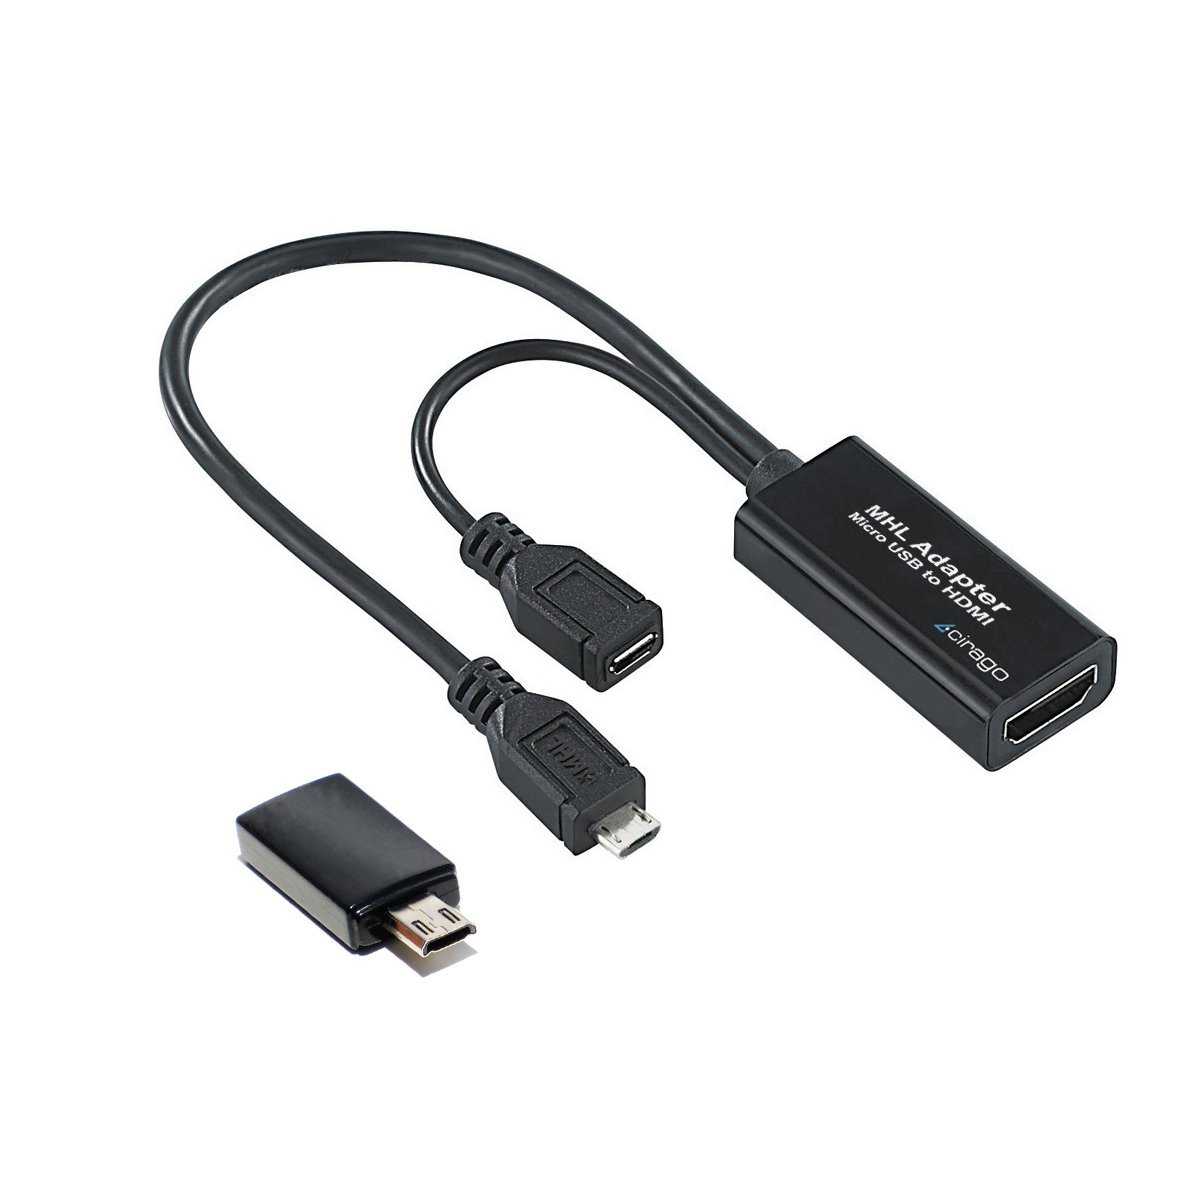 Экран телефона на телевизор через usb. Кабель USB-HDMI (подключить смартфон к телевизору). Блютуз адаптер для телевизора самсунг. Переходник с юсб на HDMI для телевизора. HDMI вай фай переходник.